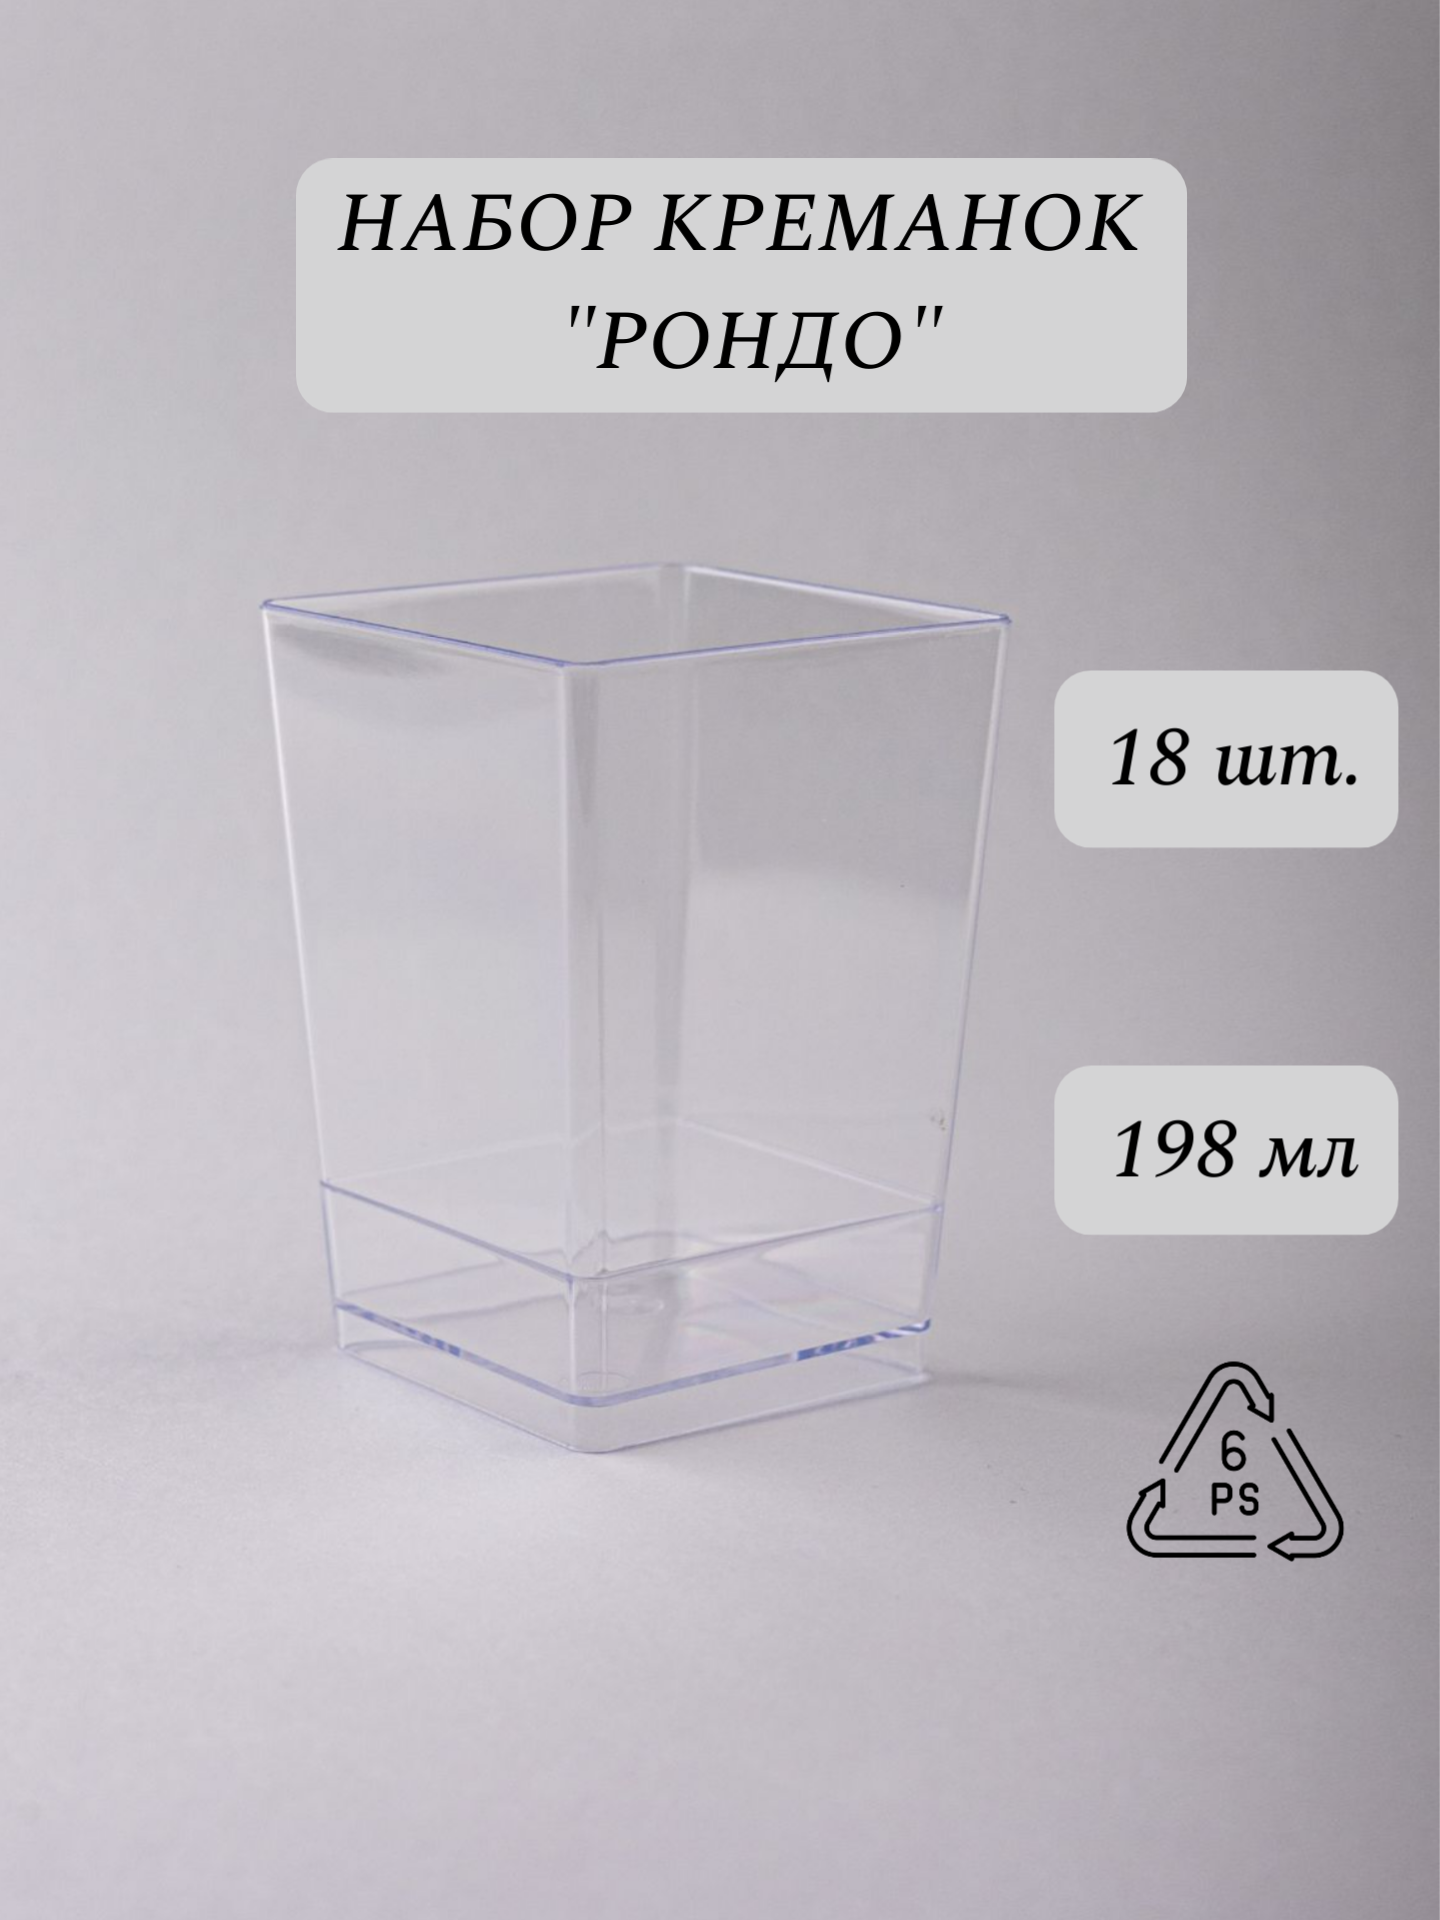 Форма для фуршетов, креманка "Рондо" (Марчелато), 198 мл, 18 шт, размер 45х55х80 мм, полистирол литьевой (PS), прозрачный пластик